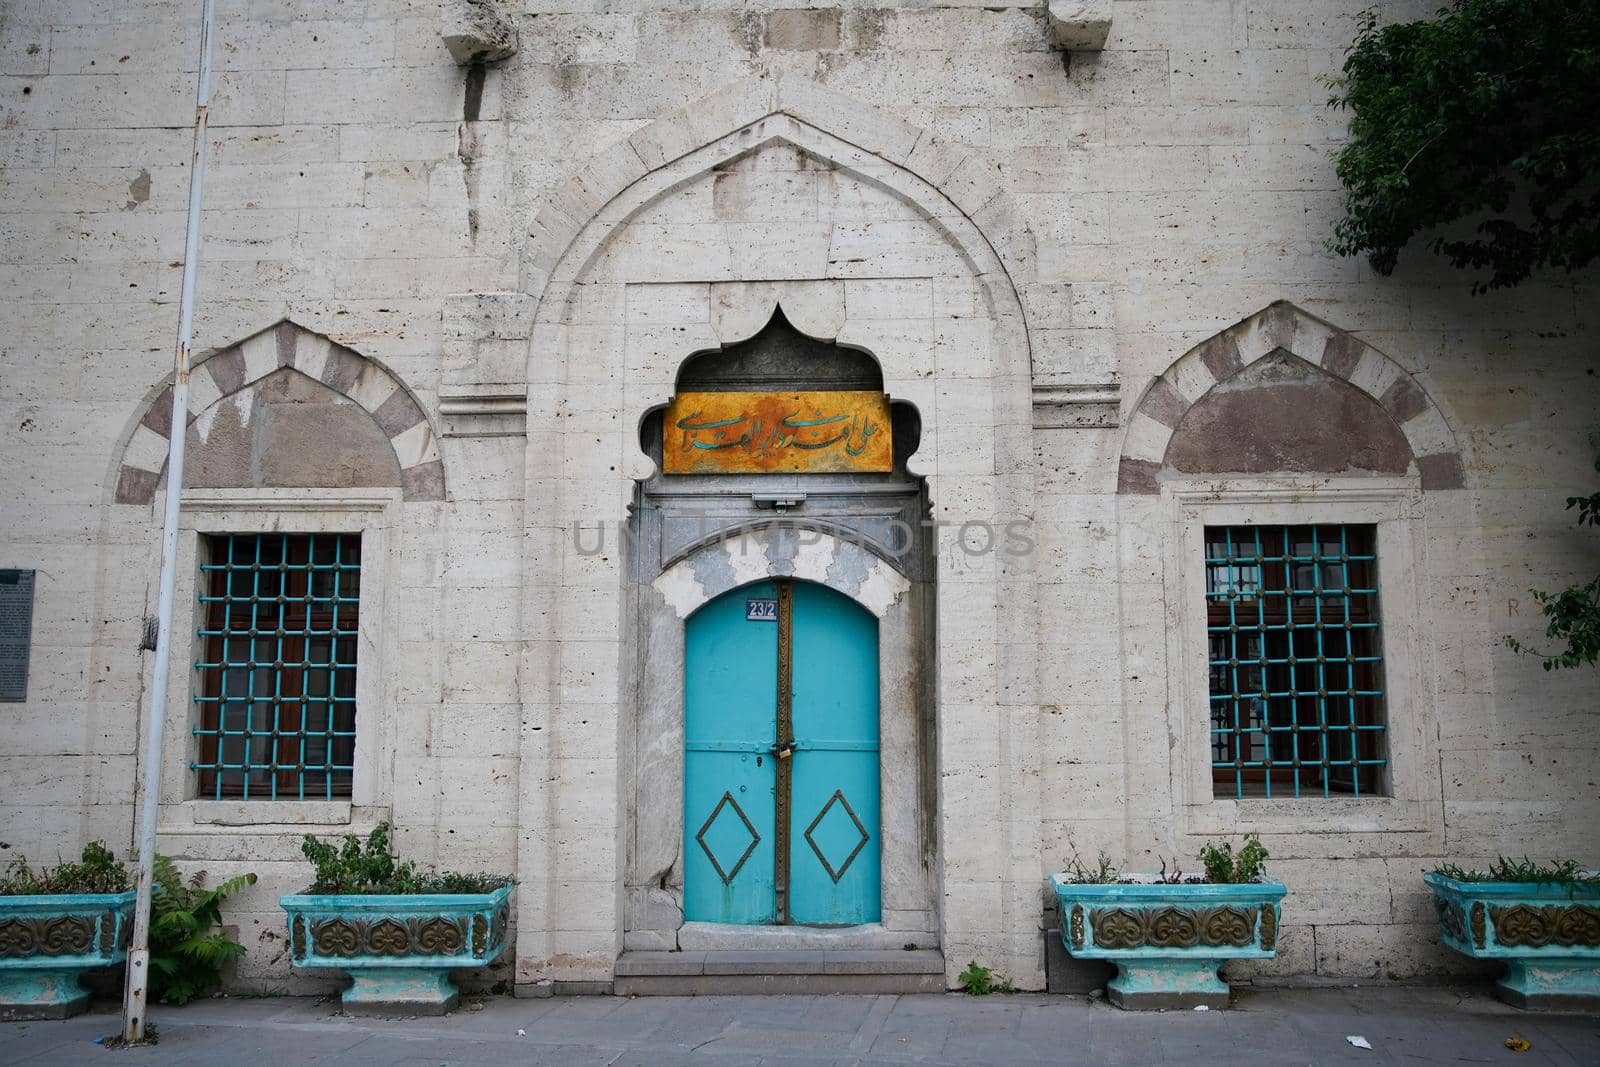 Door of an Old Building in Konya, Turkiye by EvrenKalinbacak